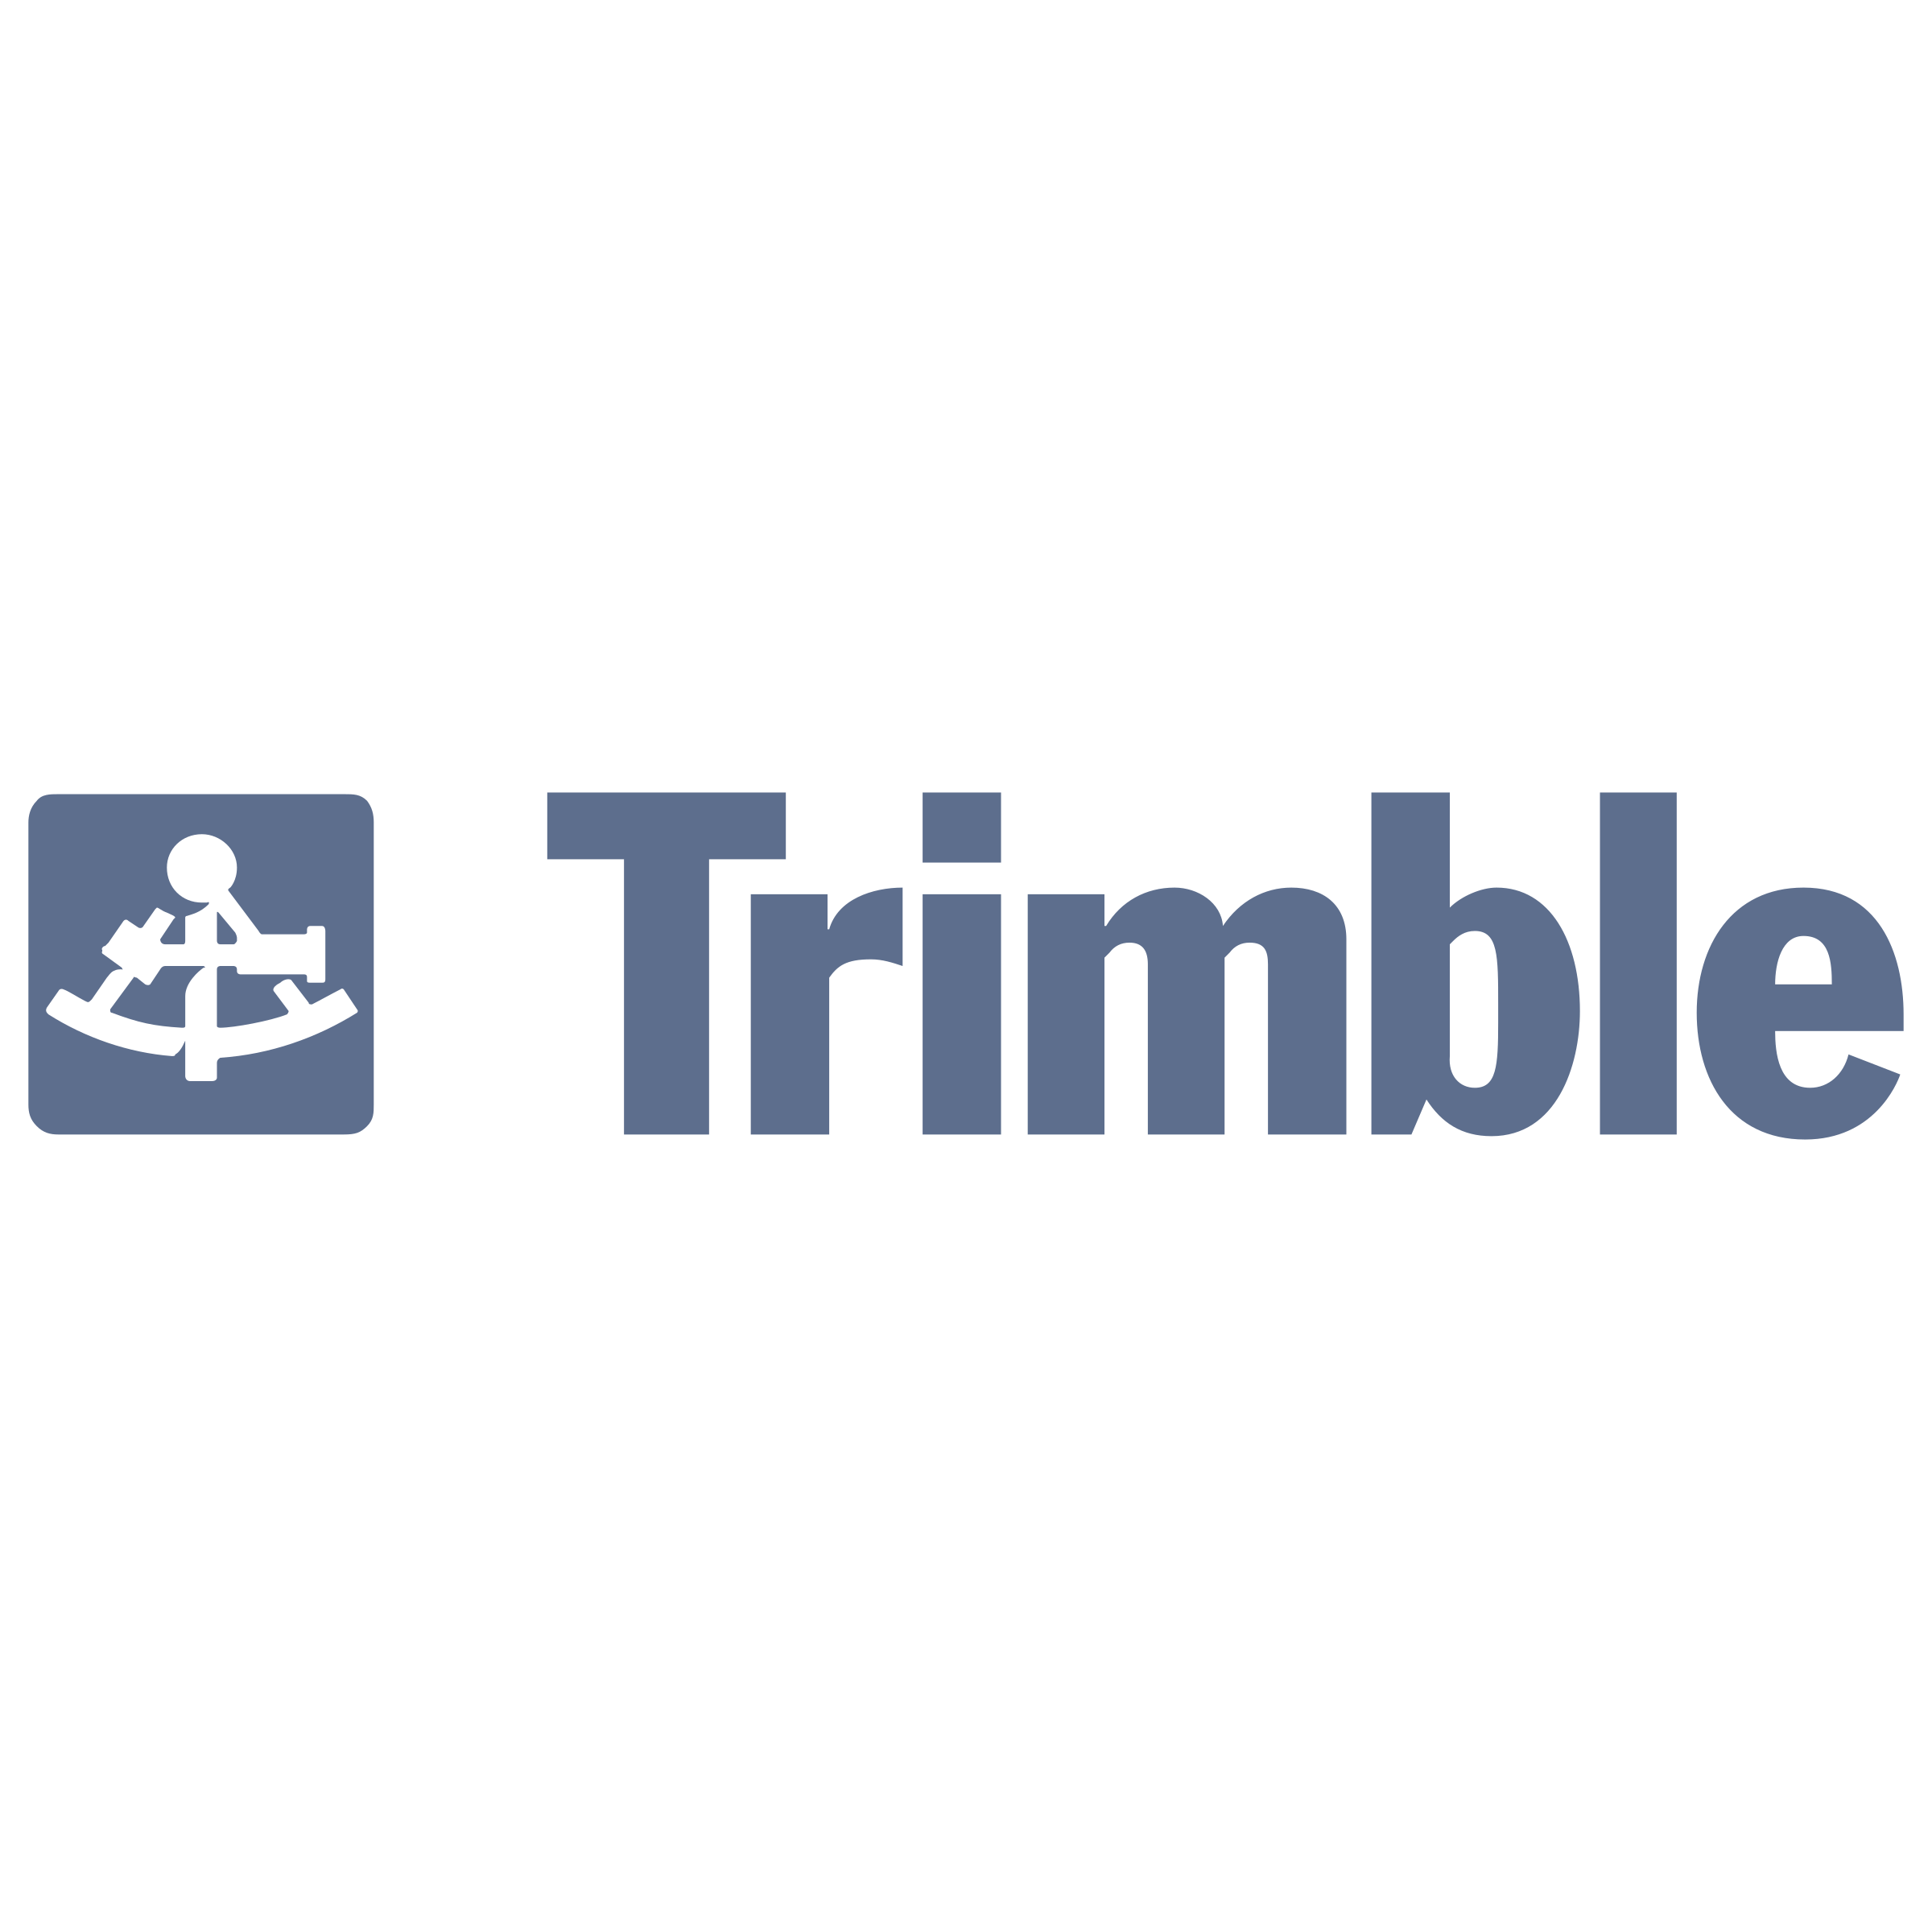 Trimble Logo - Trimble Logo PNG Transparent & SVG Vector - Freebie Supply